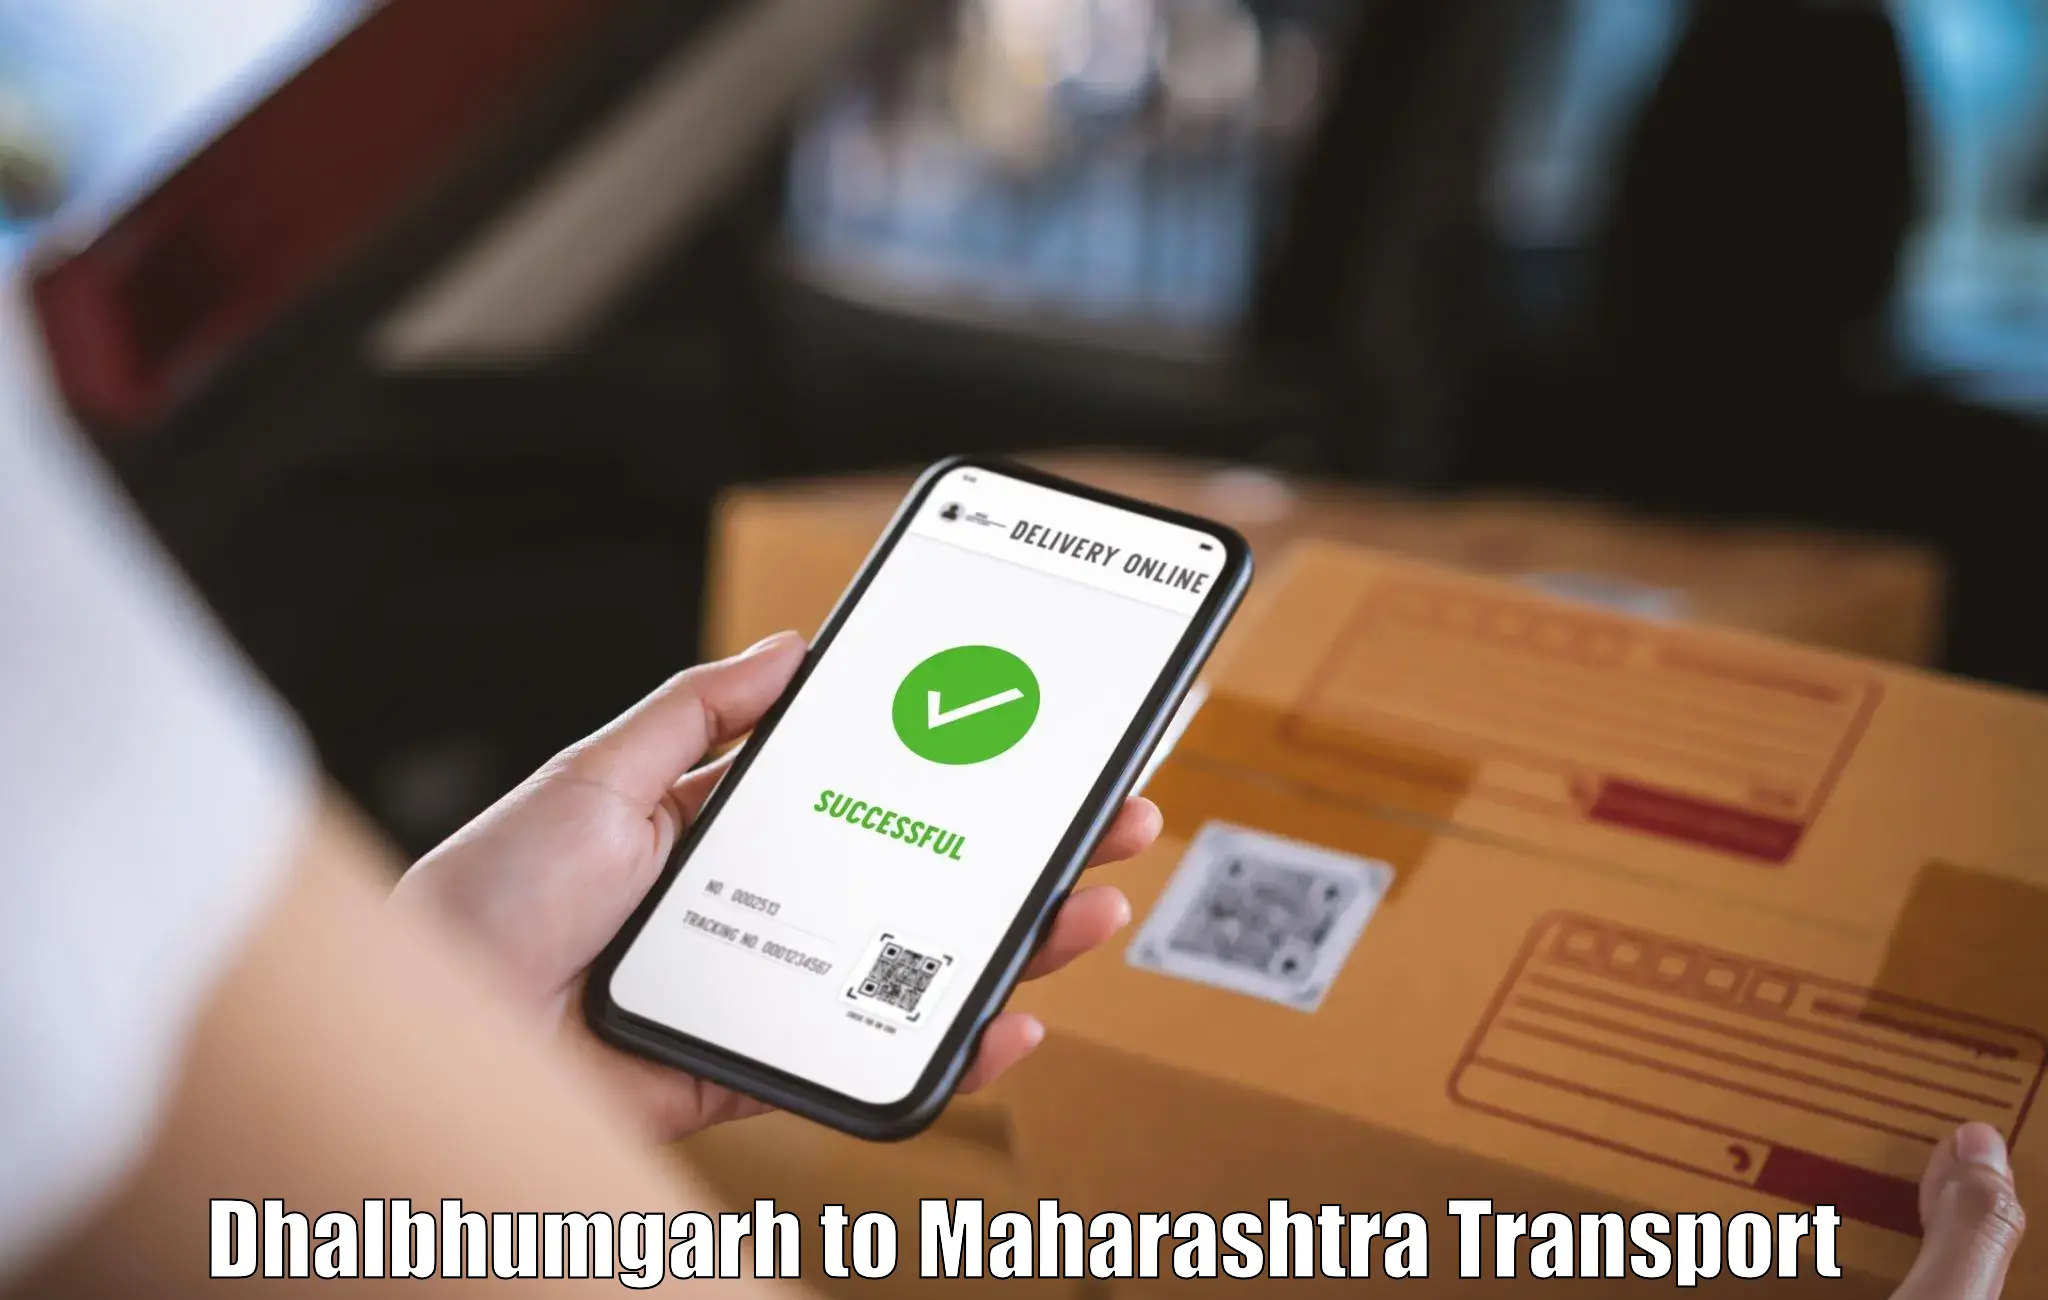 Shipping partner Dhalbhumgarh to Dongarkinhi